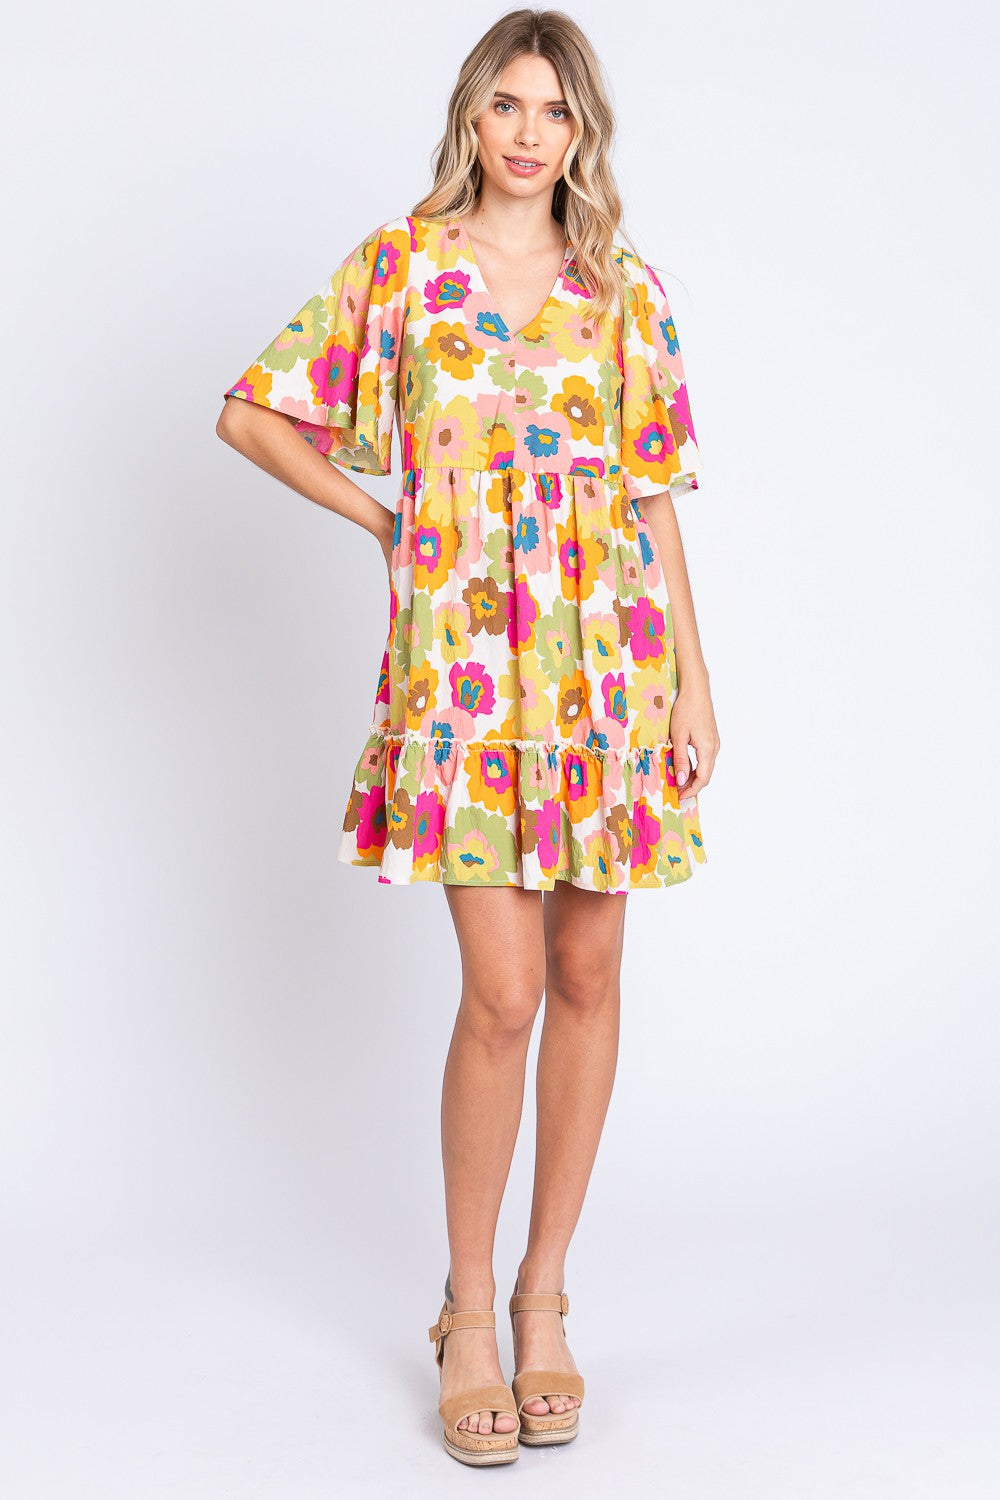 GeeGee Summer Sun Full Size Floral V-Neck Ruffle Trim Mini Dress